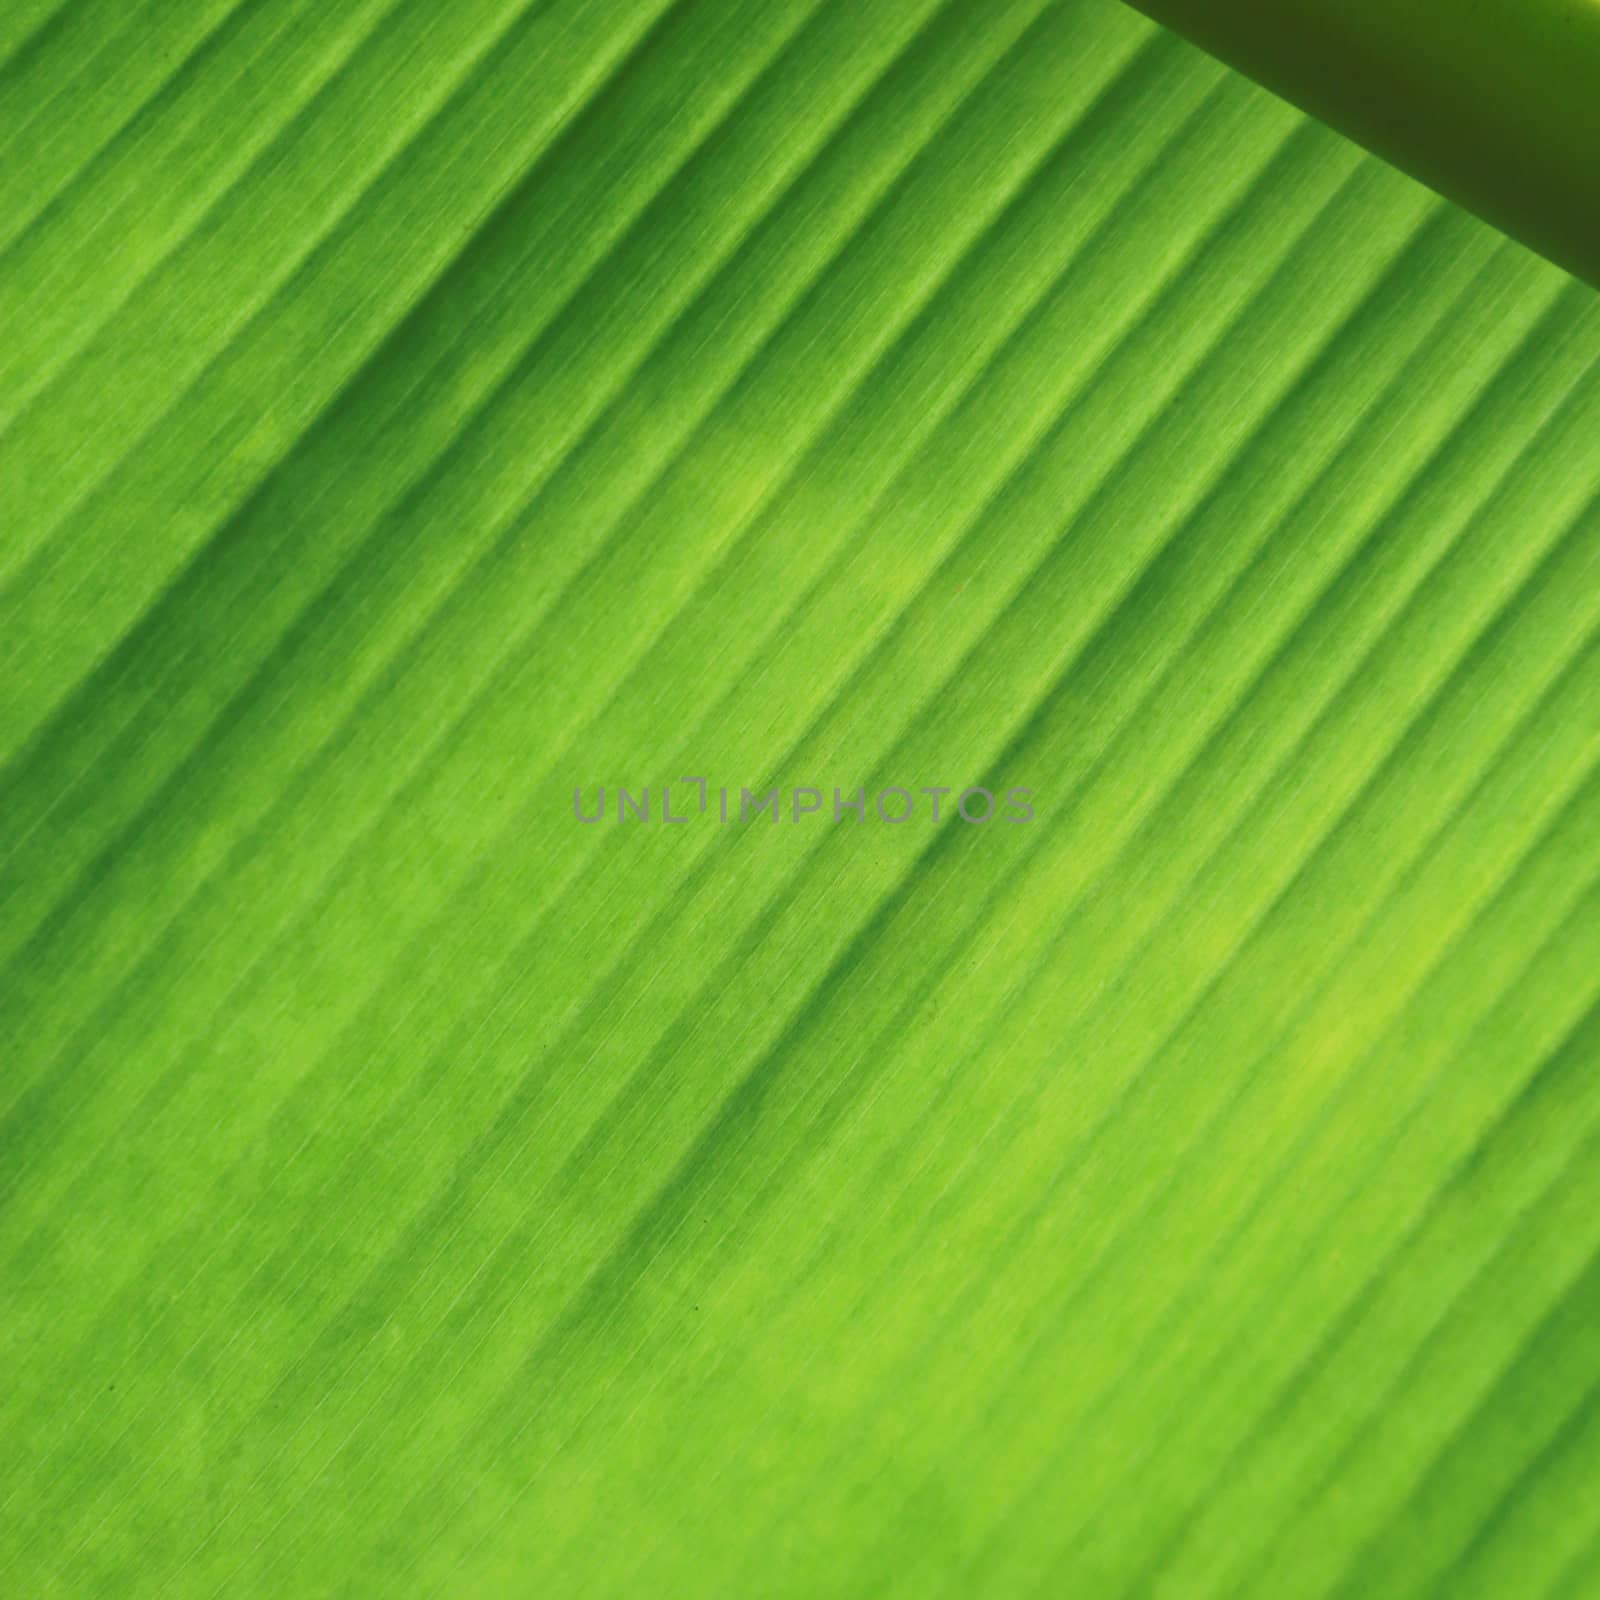 Banana leaf by liewluck